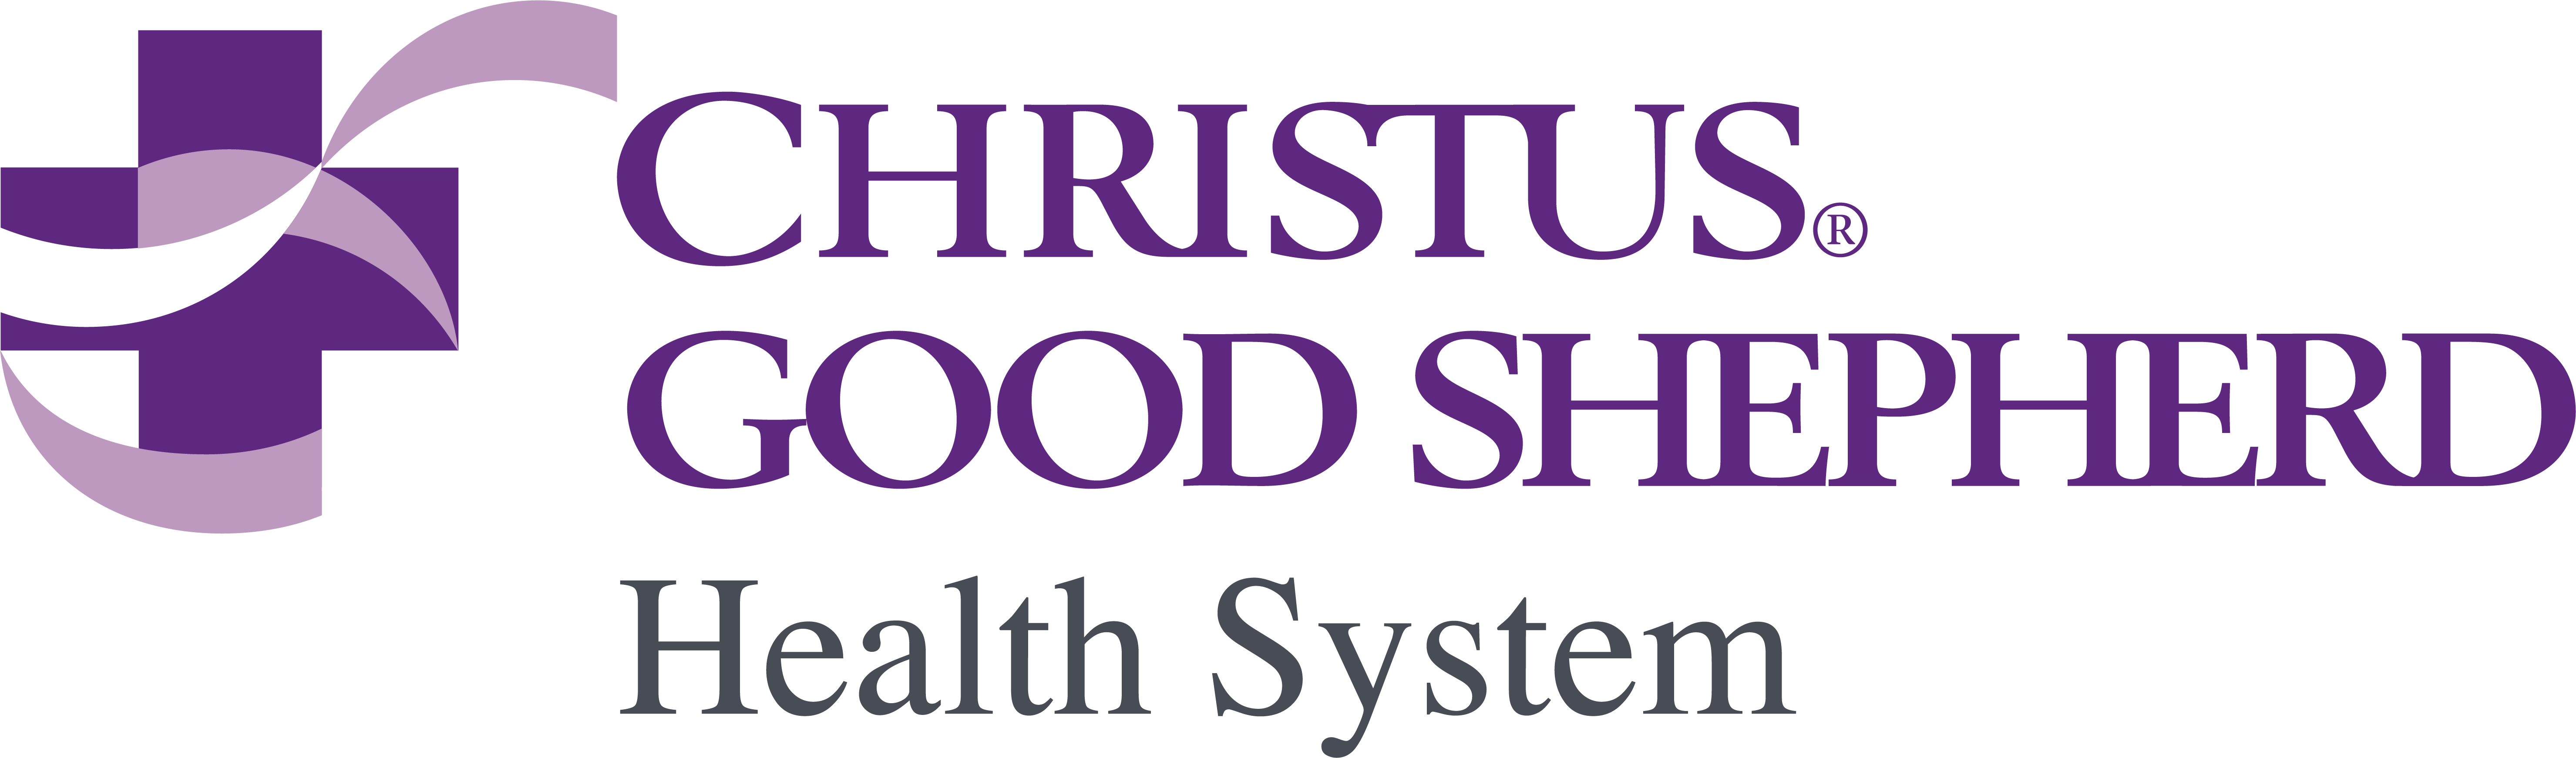 Christus Good Shepherd logo